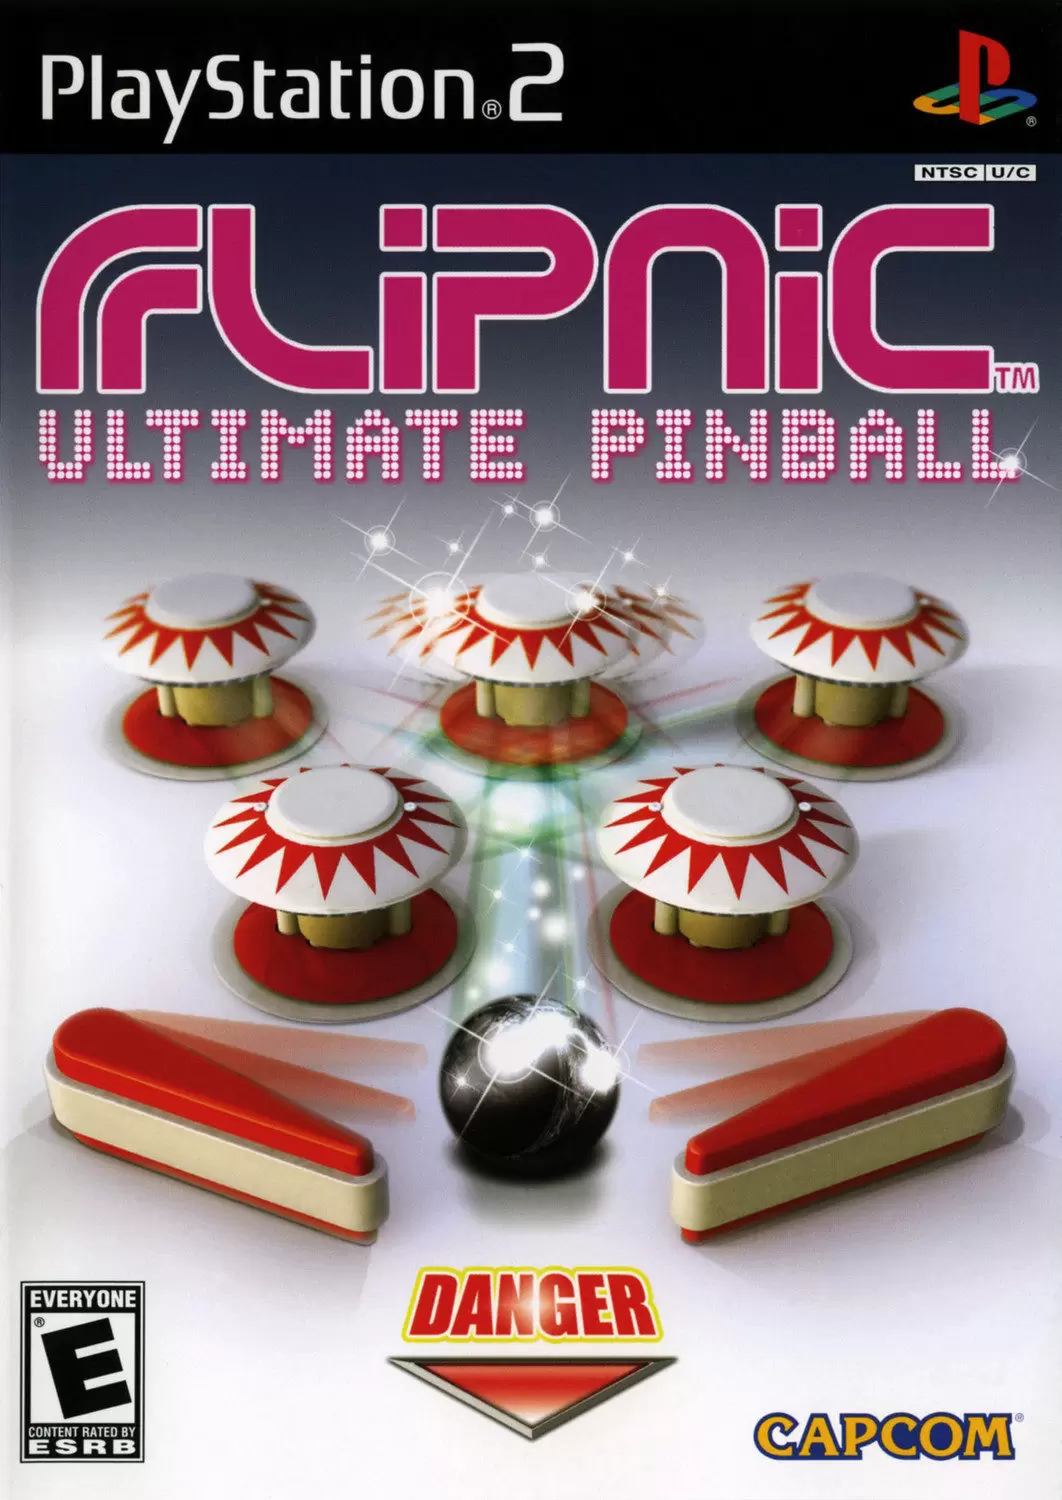 Jeux PS2 - Flipnic: Ultimate Pinball